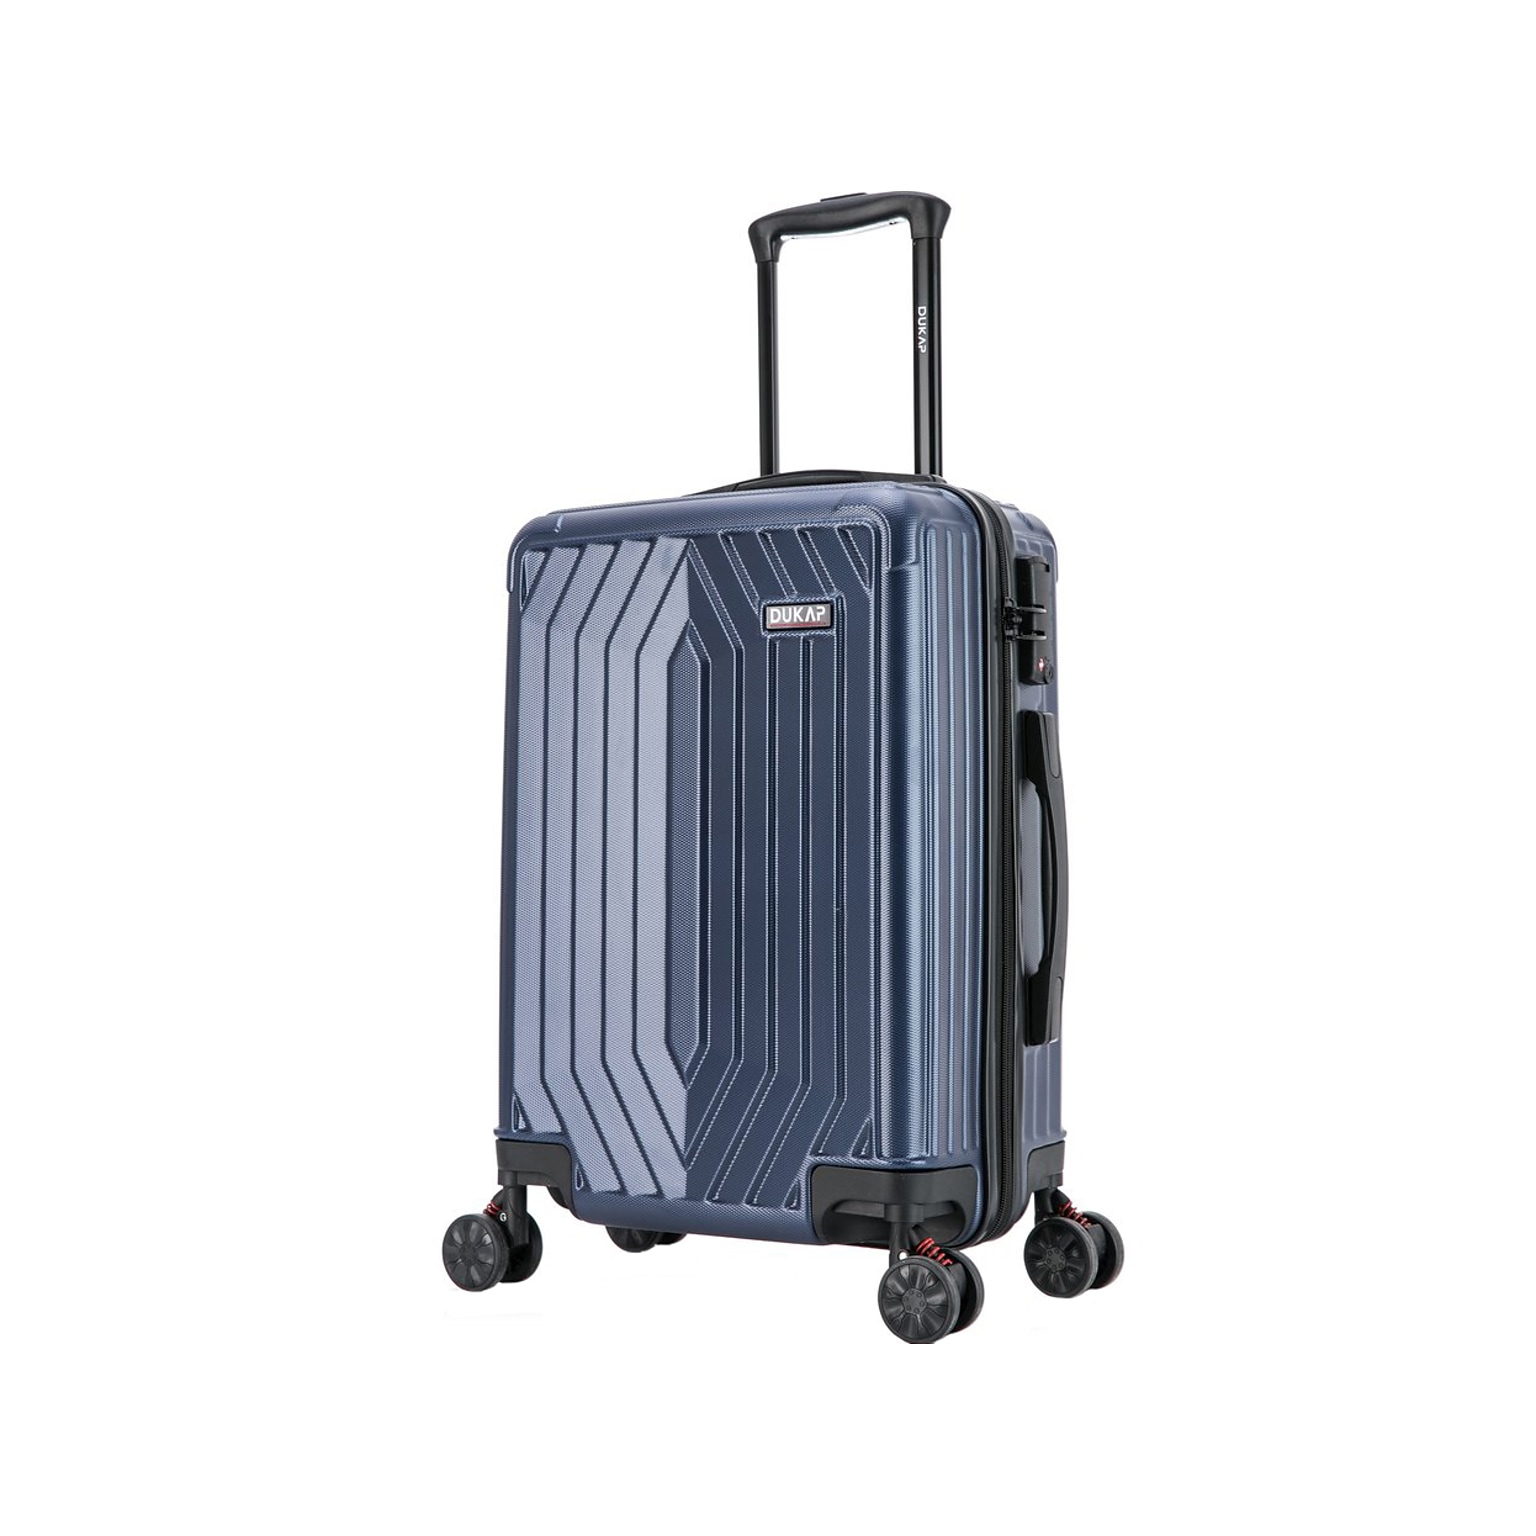 DUKAP Stratos 21.65 Hardside Carry-On Suitcase, 4-Wheeled Spinner, TSA Checkpoint Friendly, Blue (DKSTR00S-BLU)